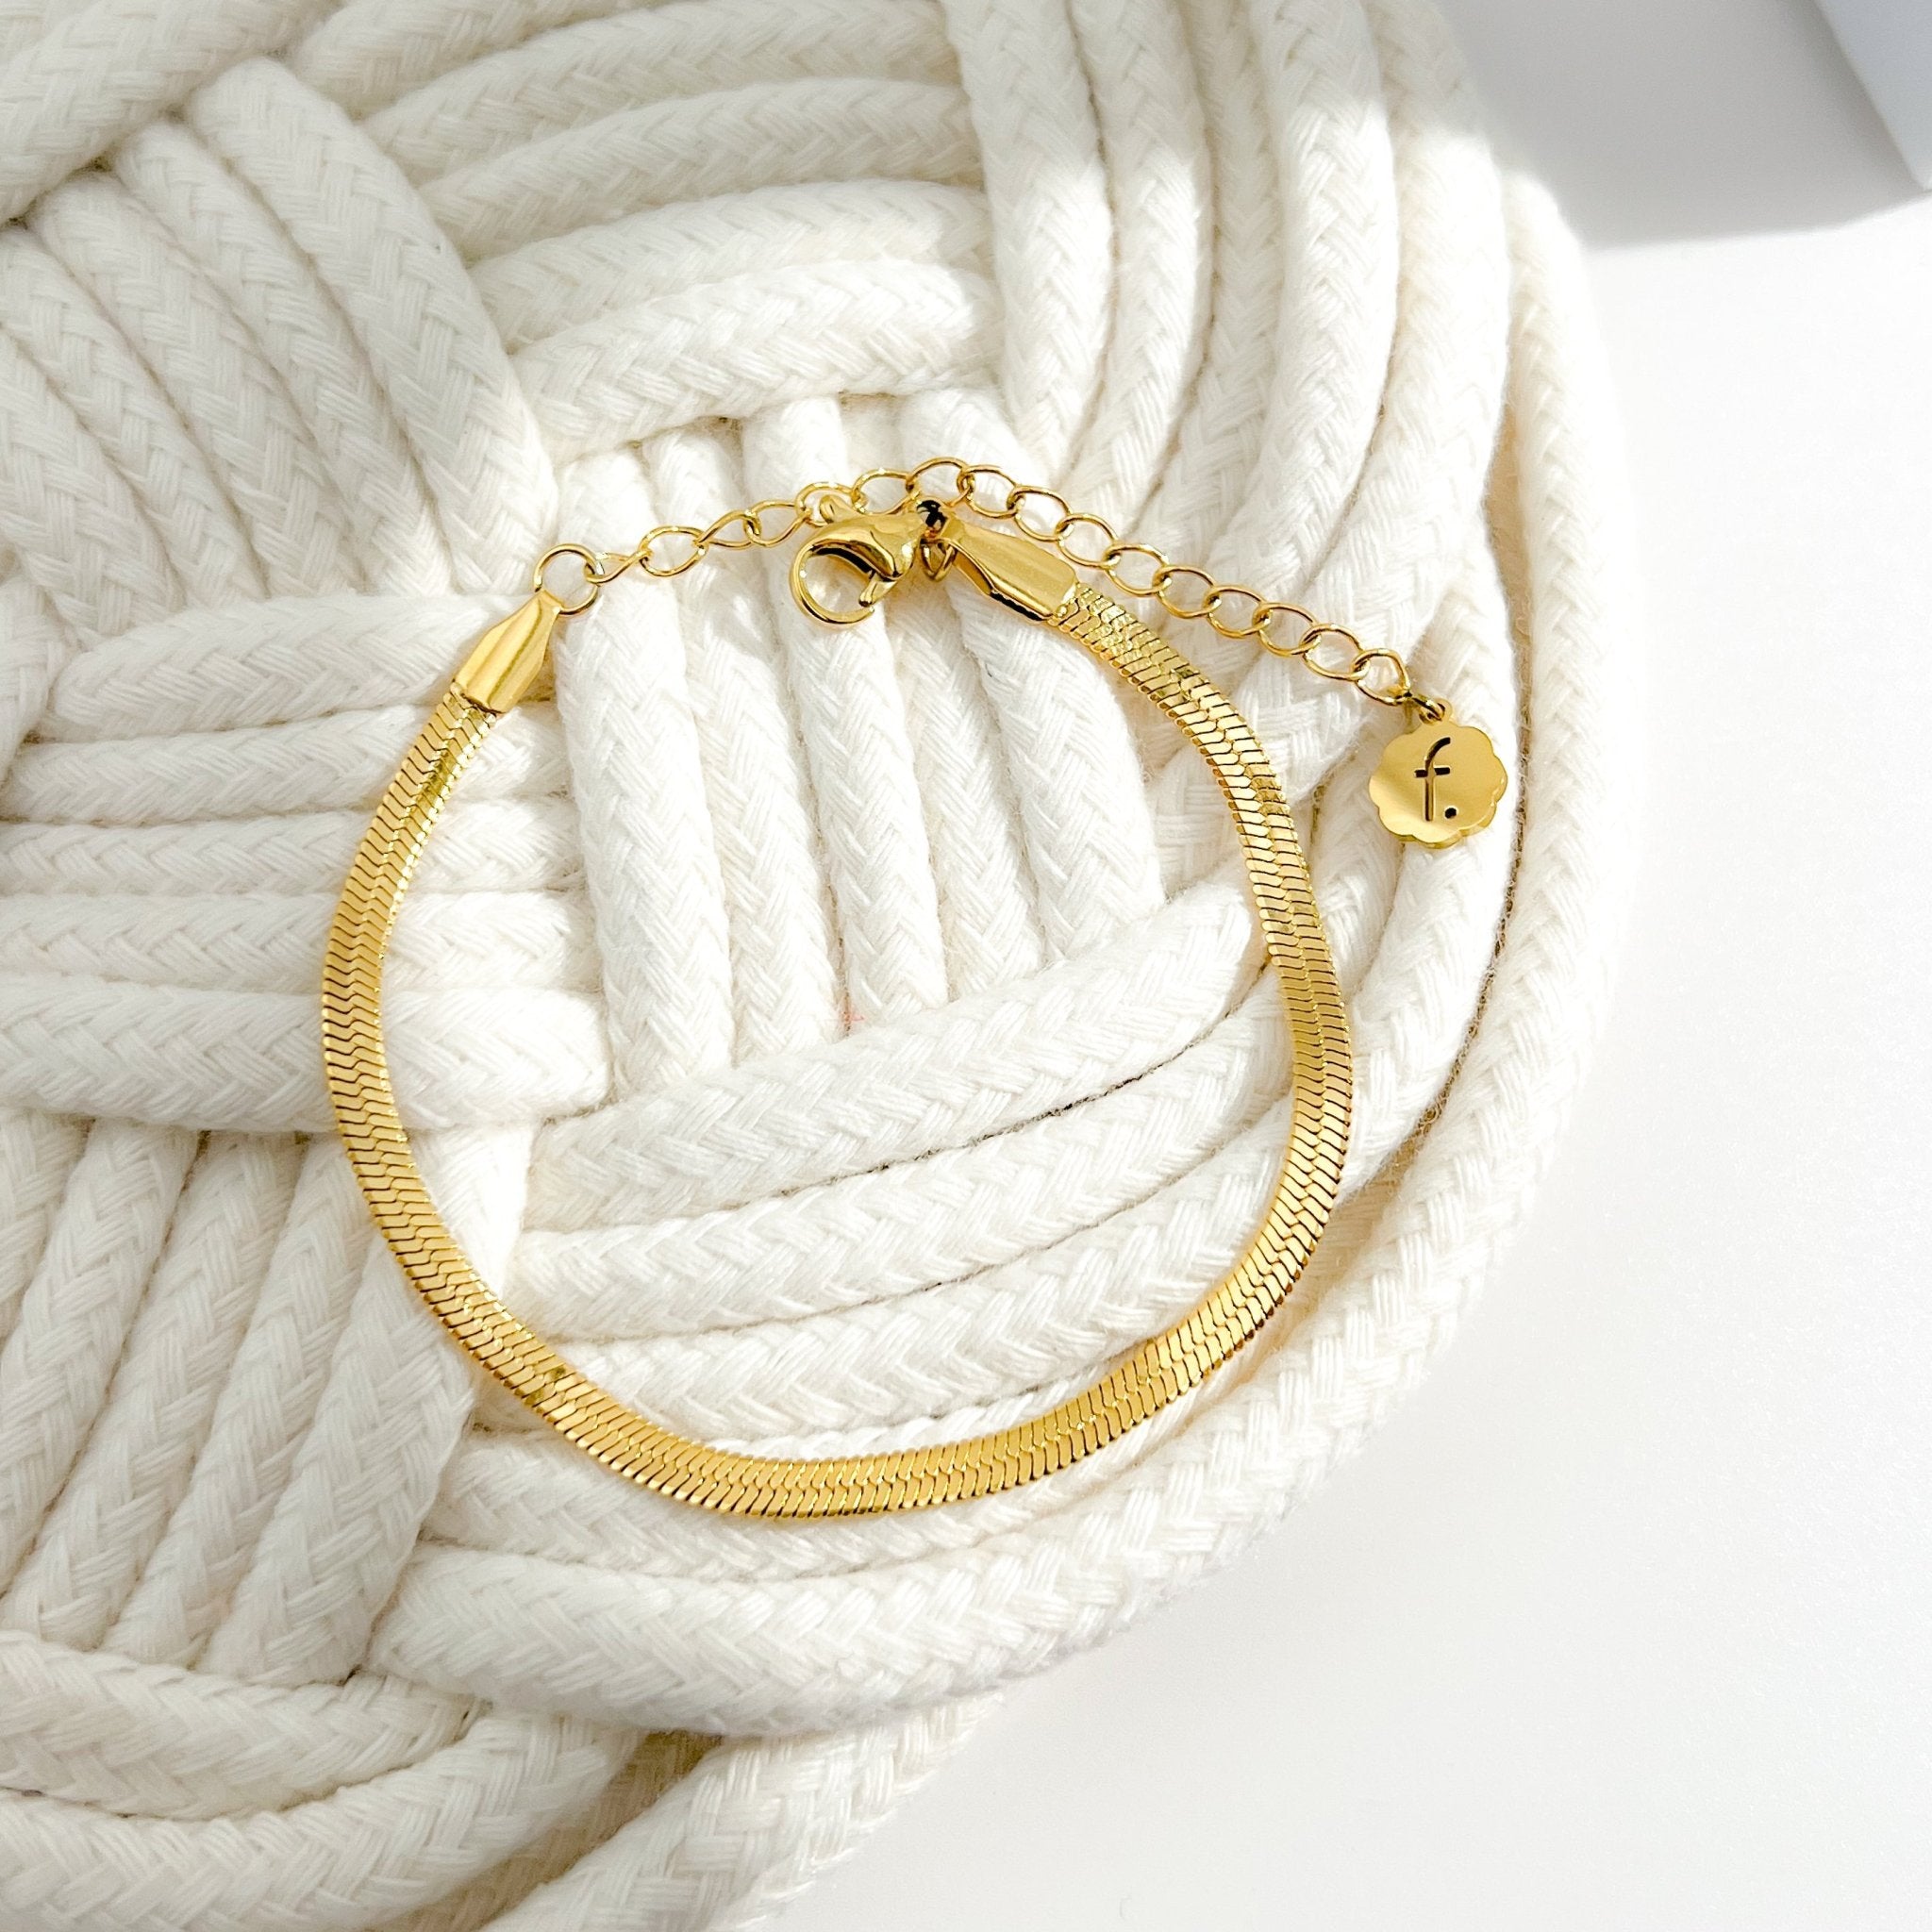 Herringbone Chain Bracelet in Gold - Flaire & Co.